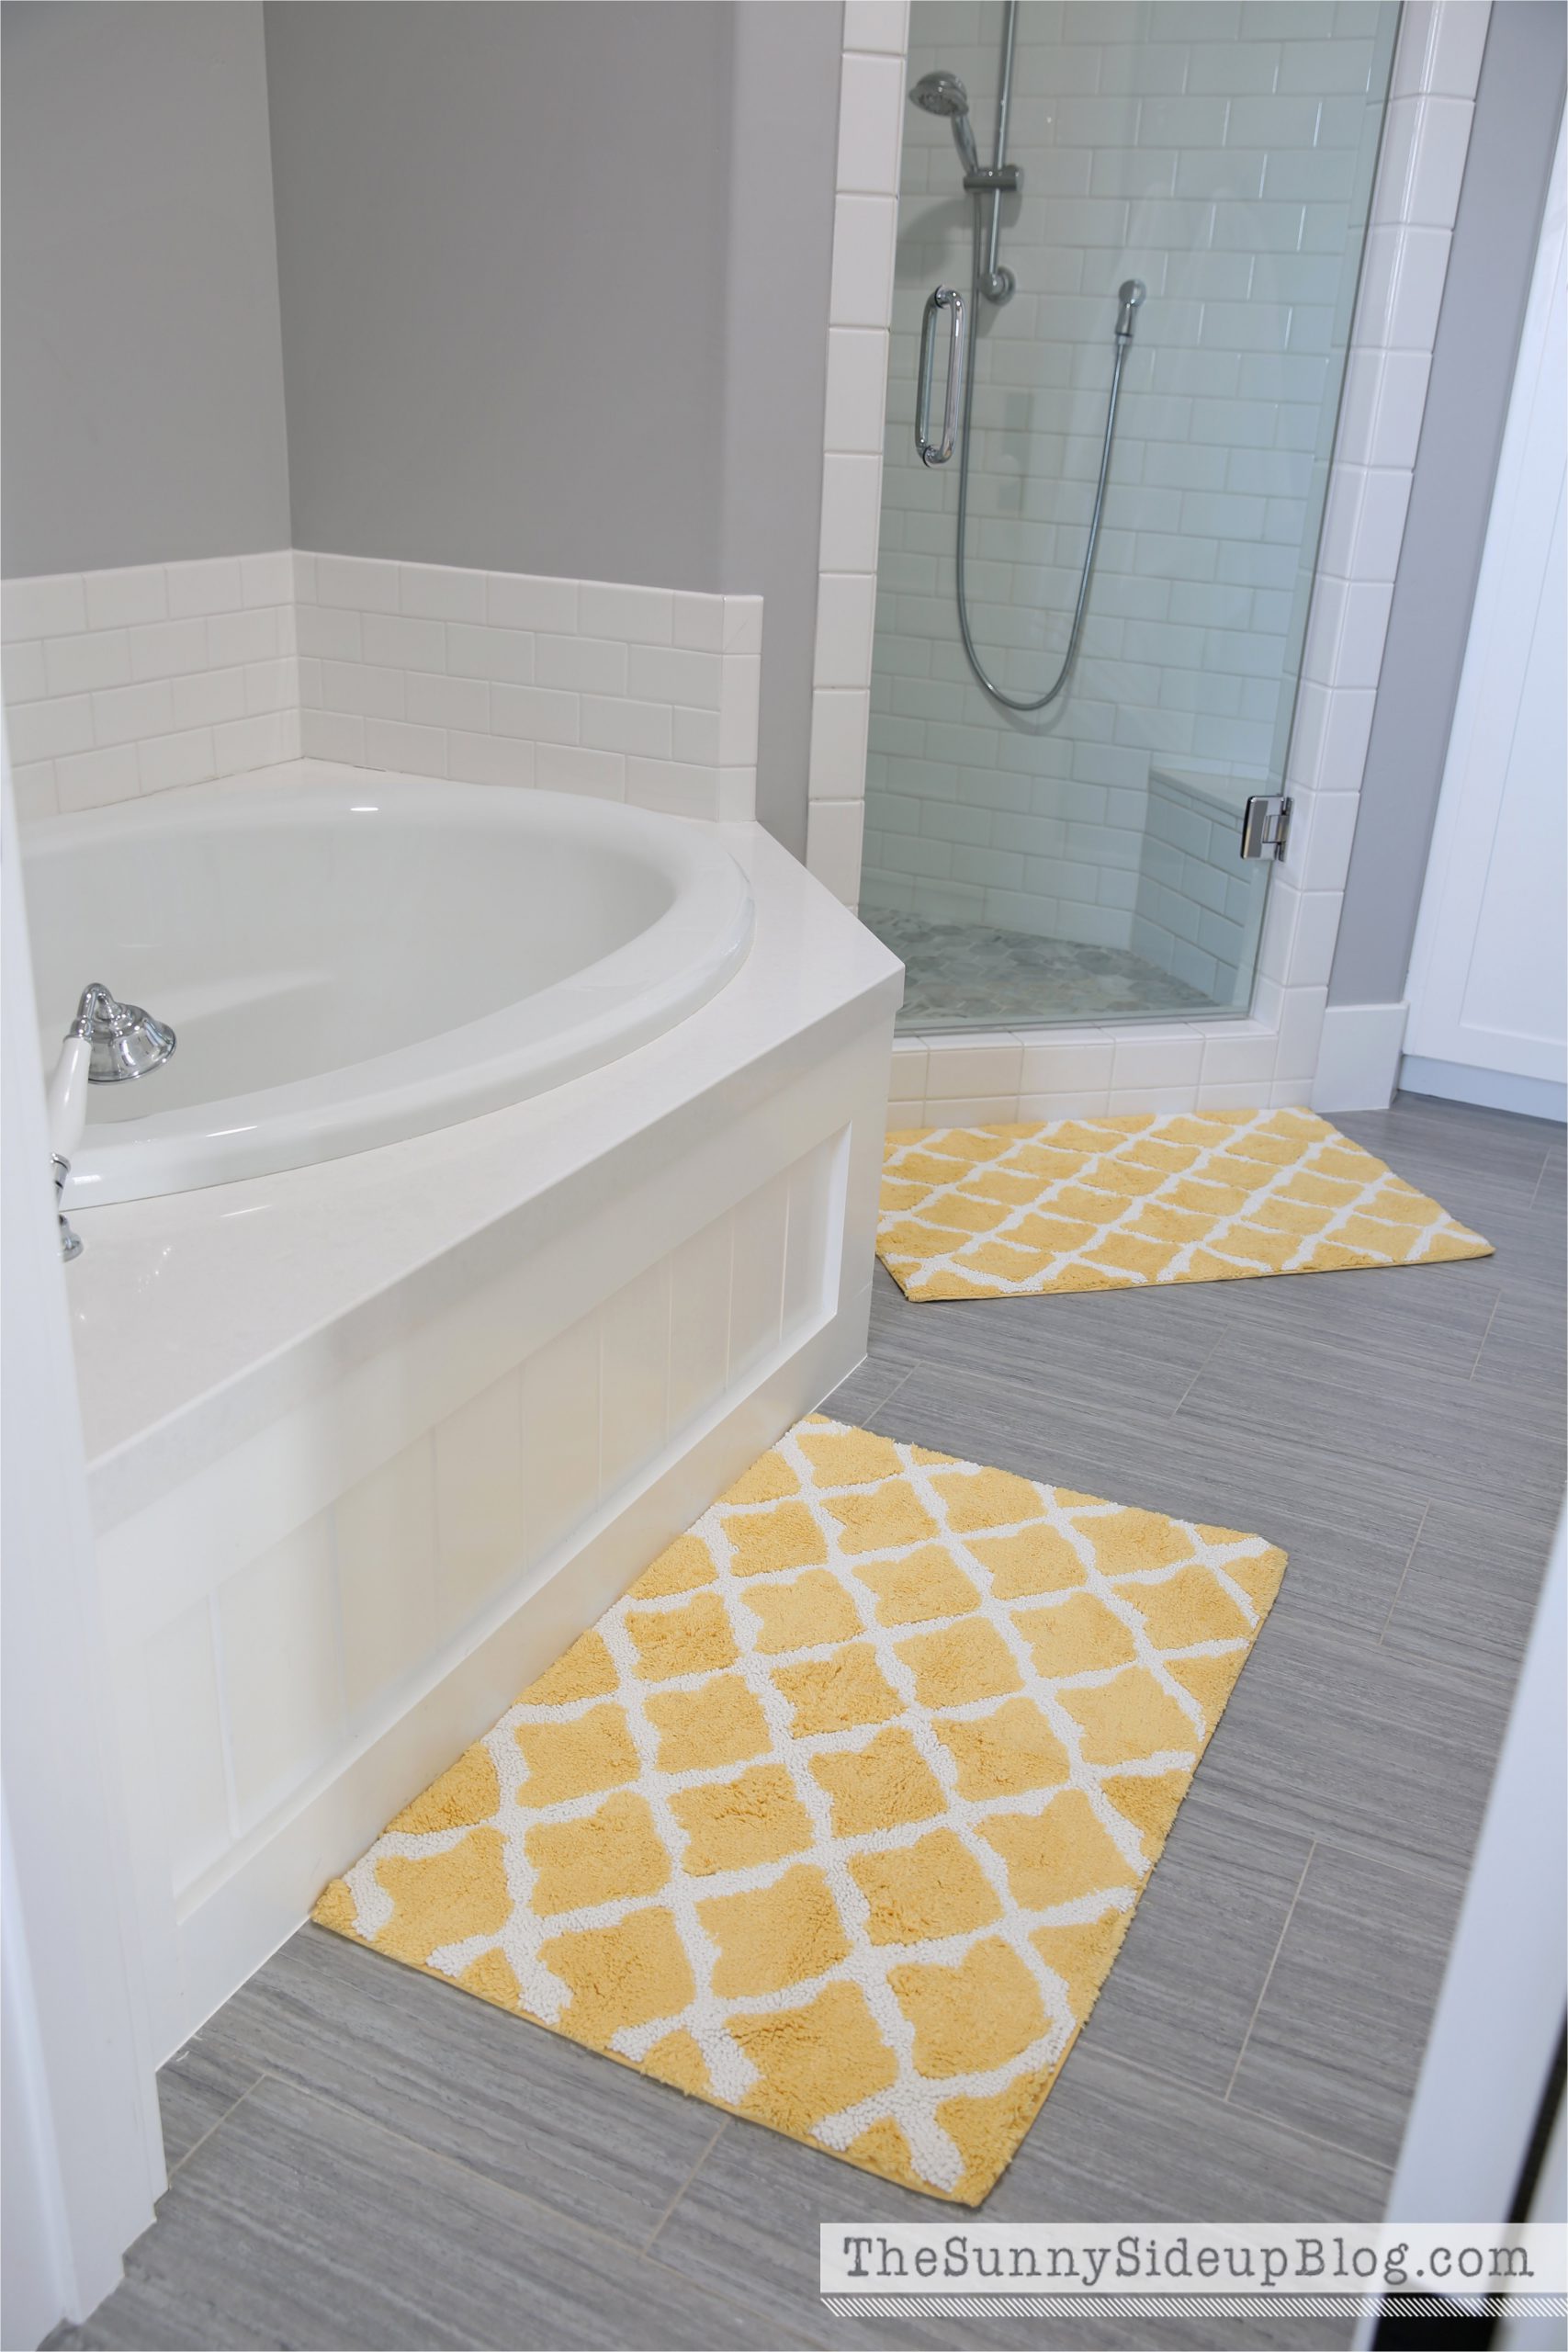 Large Yellow Bathroom Rugs Bathroom Rugs Tar Image Of Bathroom and Closet